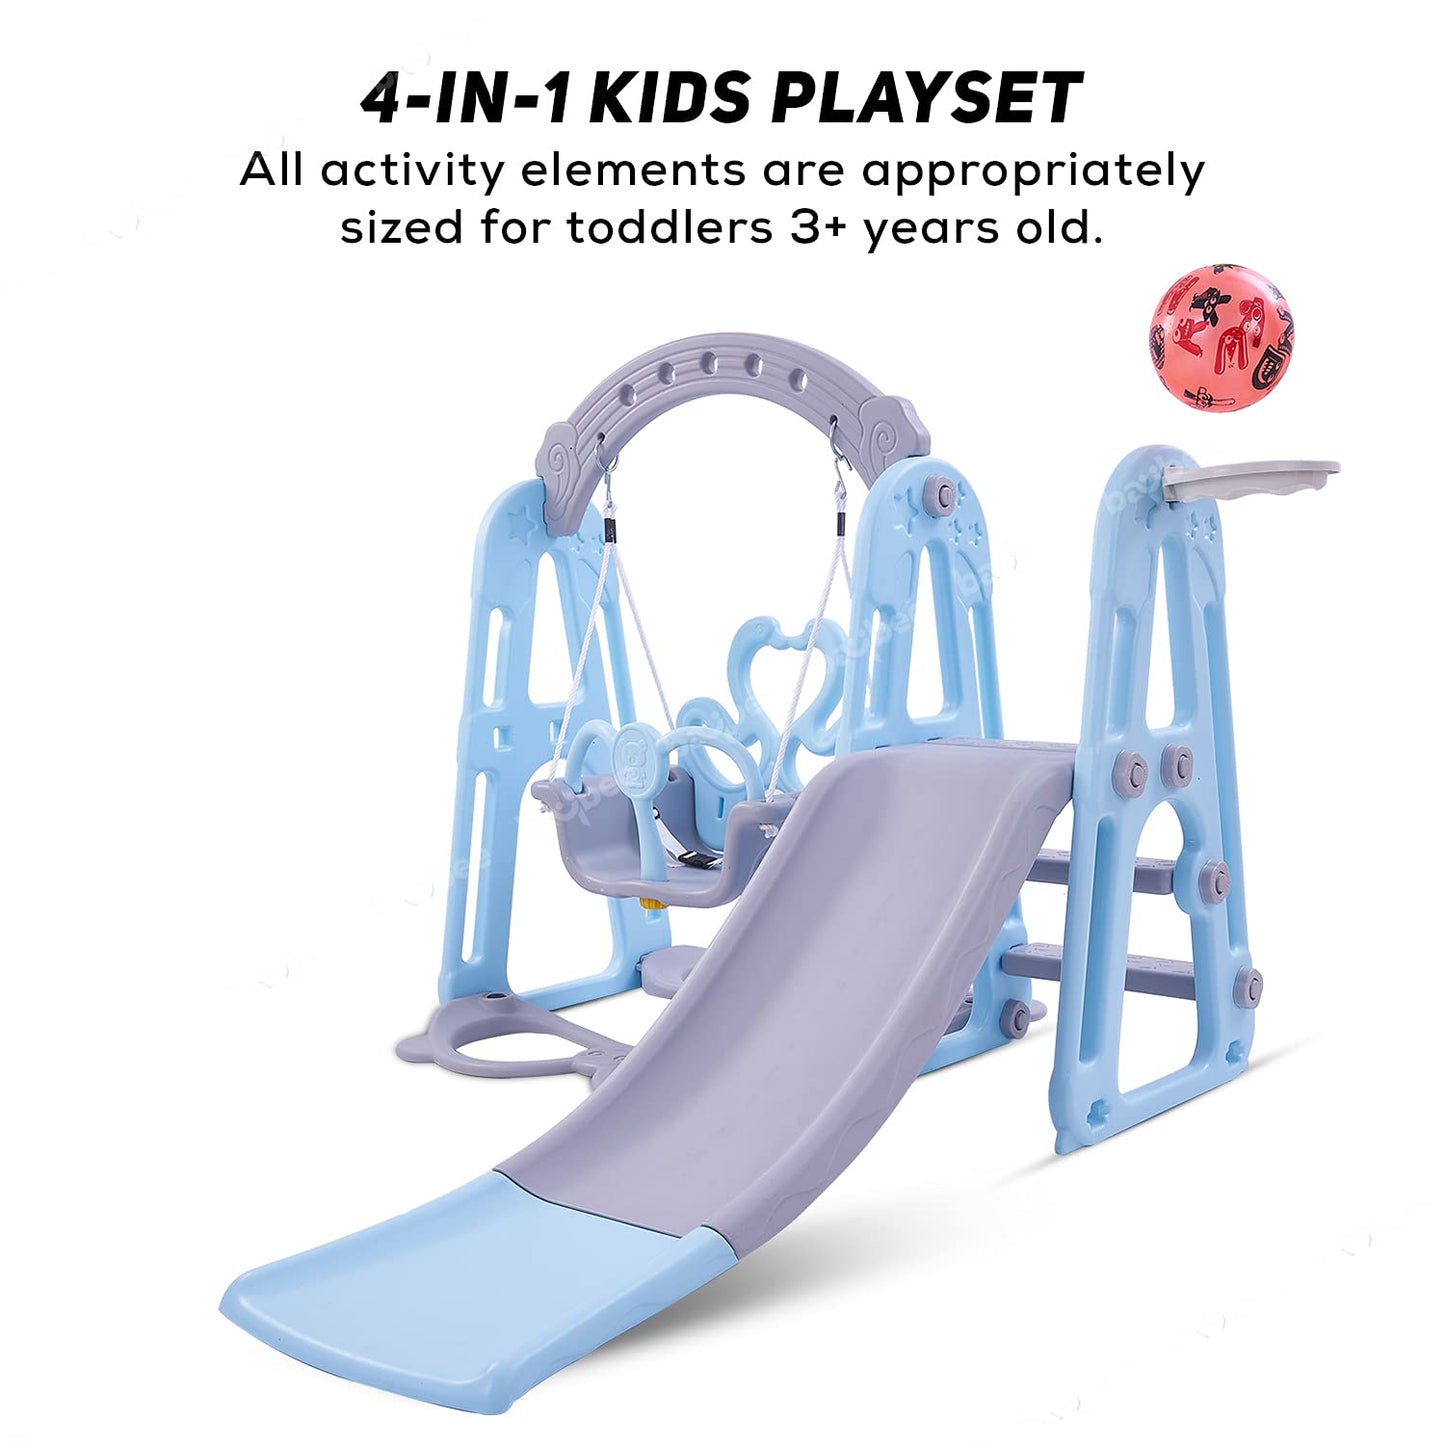 Baybee Swing and Slide Foldable Baby Garden Slide for Kids